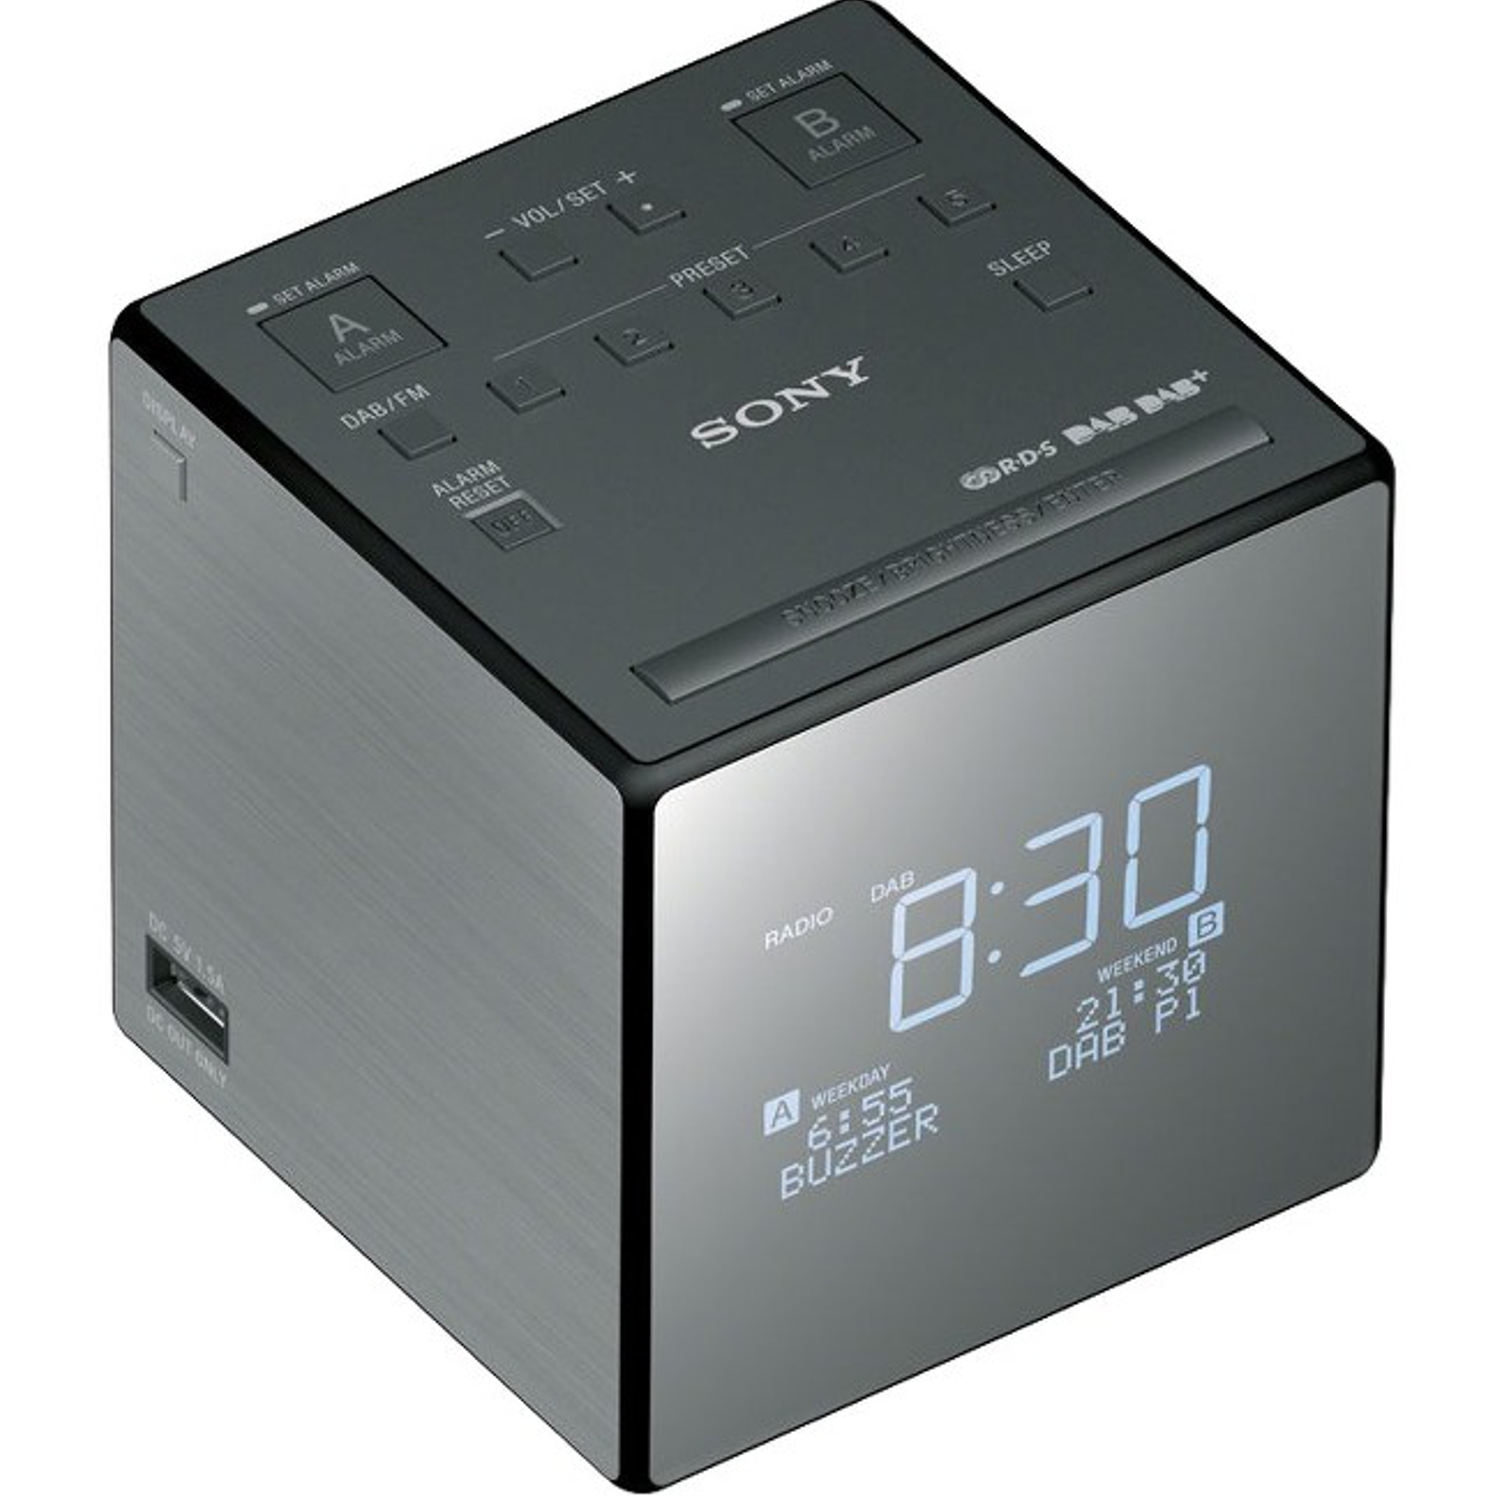 Sony Portable DAB/DAB+/FM Mirrored Digital Clock Radio - 0